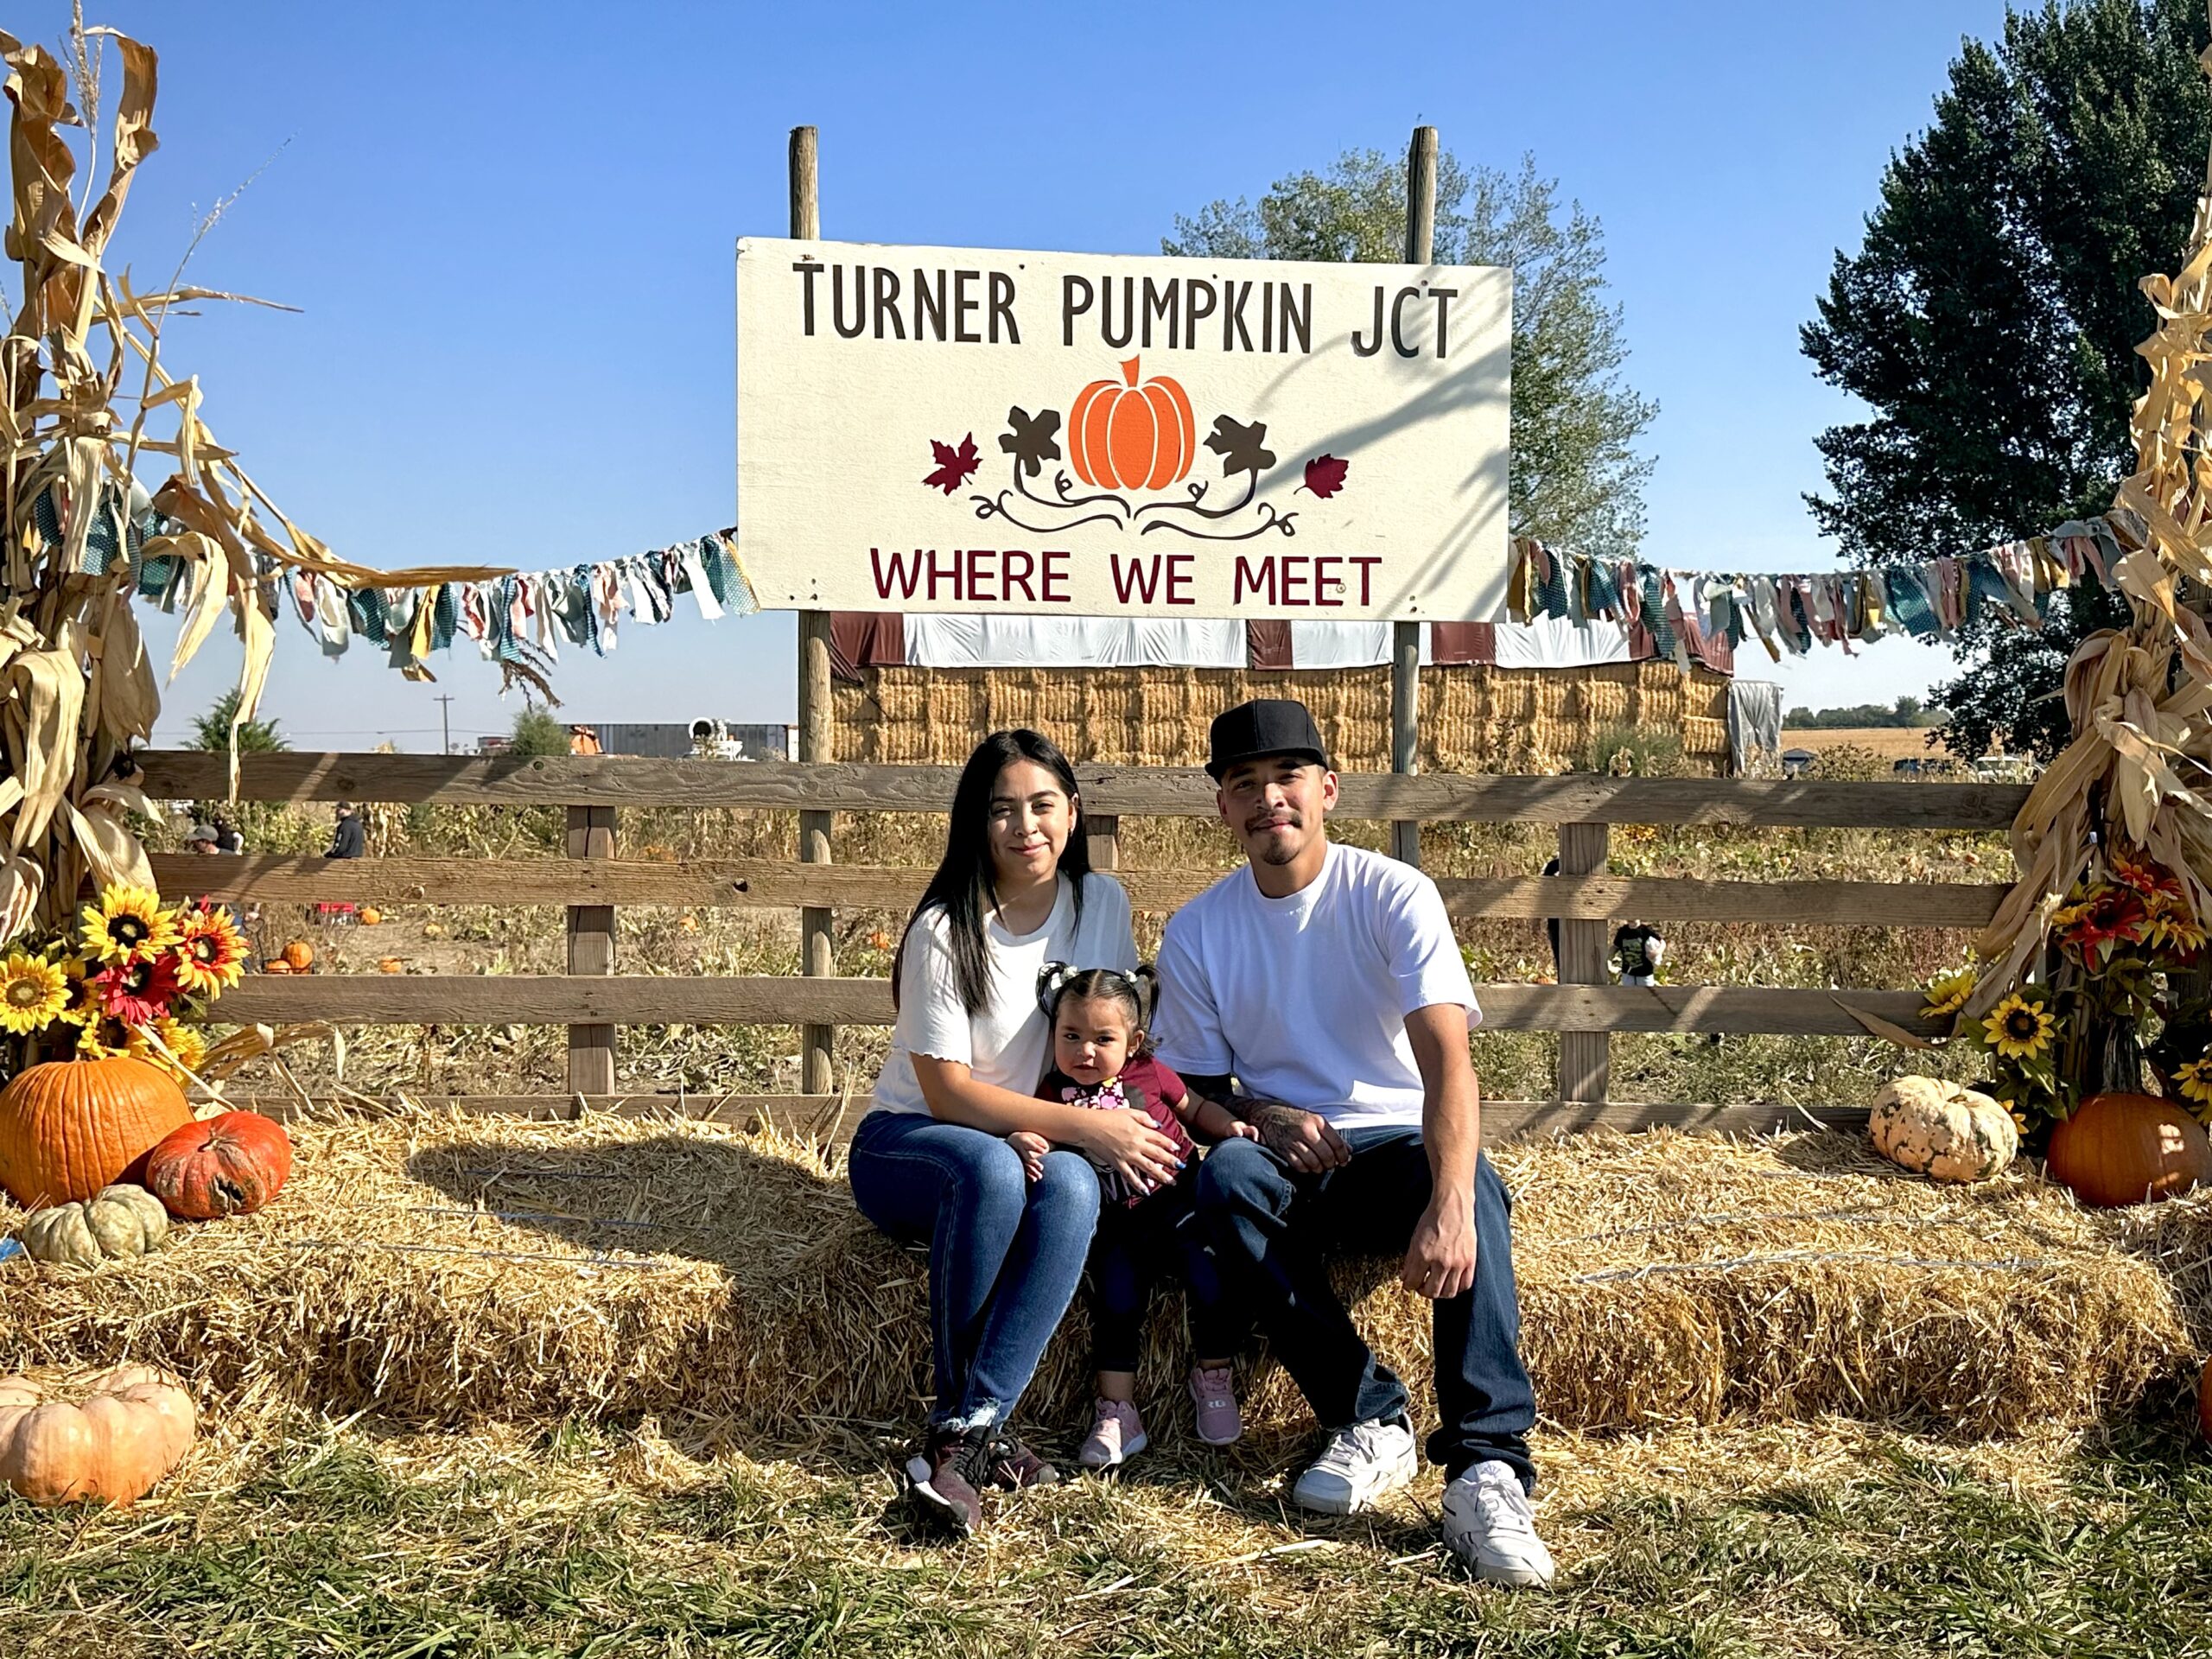 Turner pumpkin junction -109